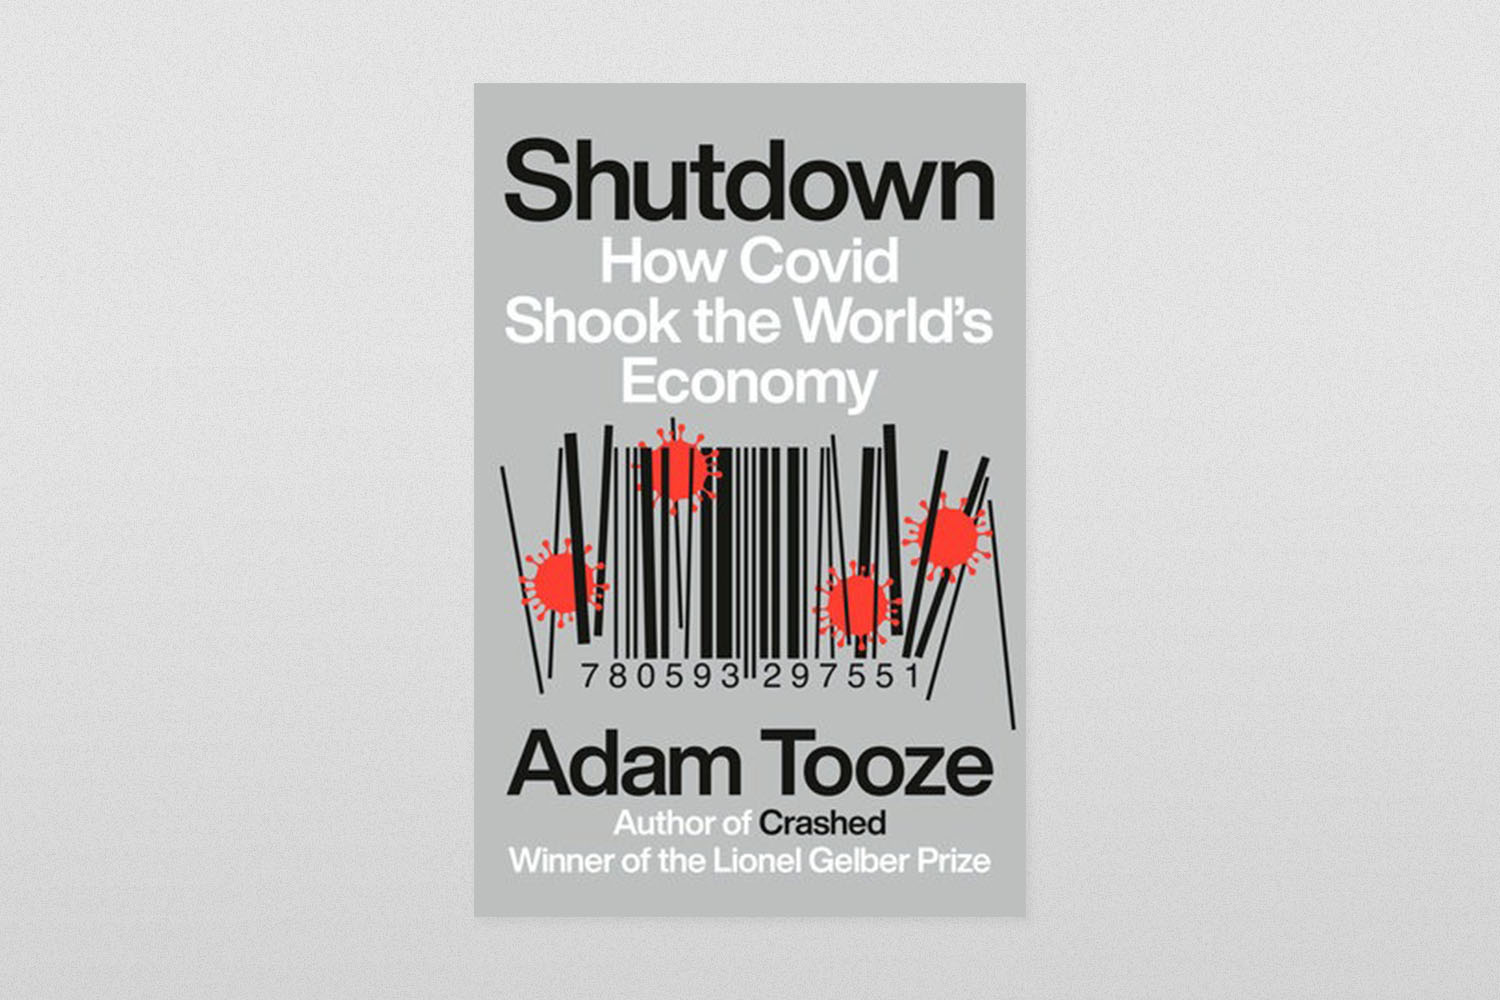 "Shutdown: How Covid Shook the World's Economy"